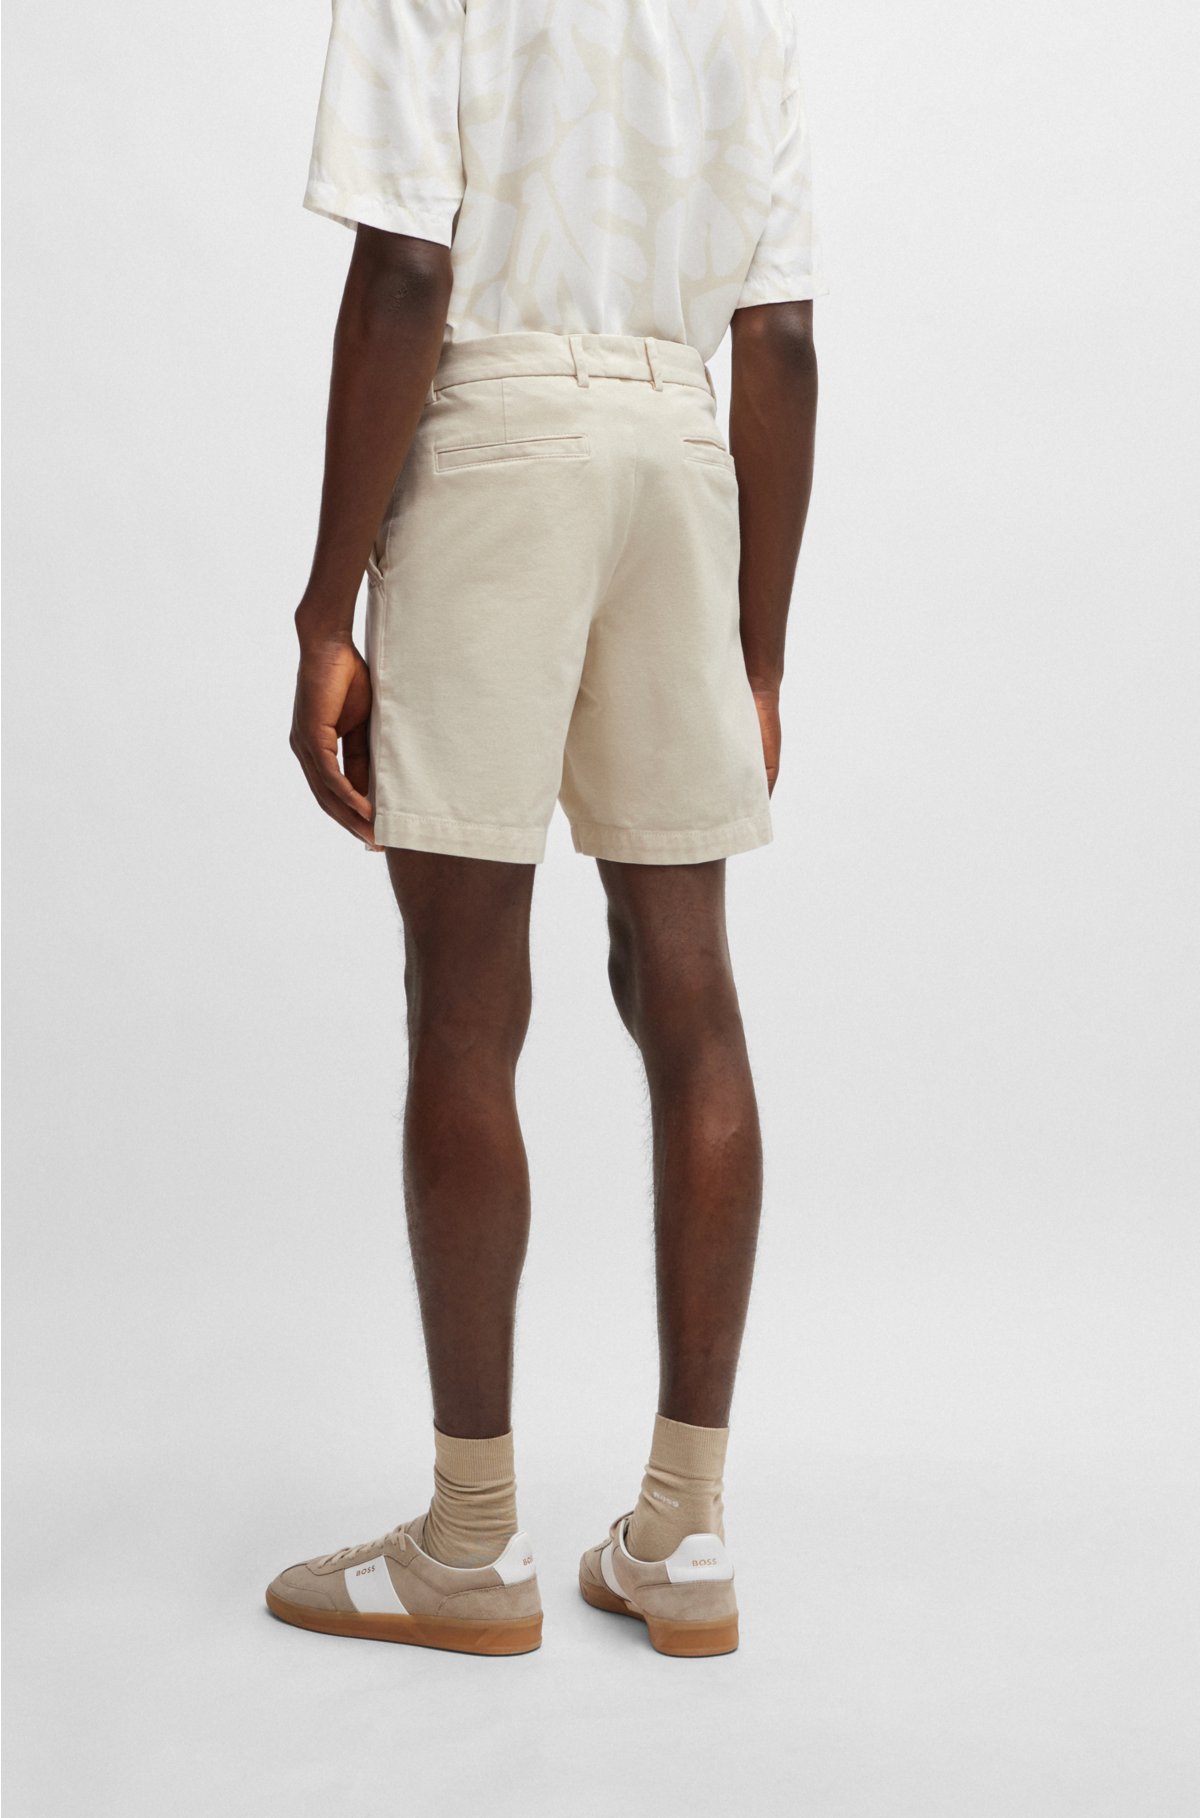 BOSS - Regular-fit regular-rise shorts in stretch cotton